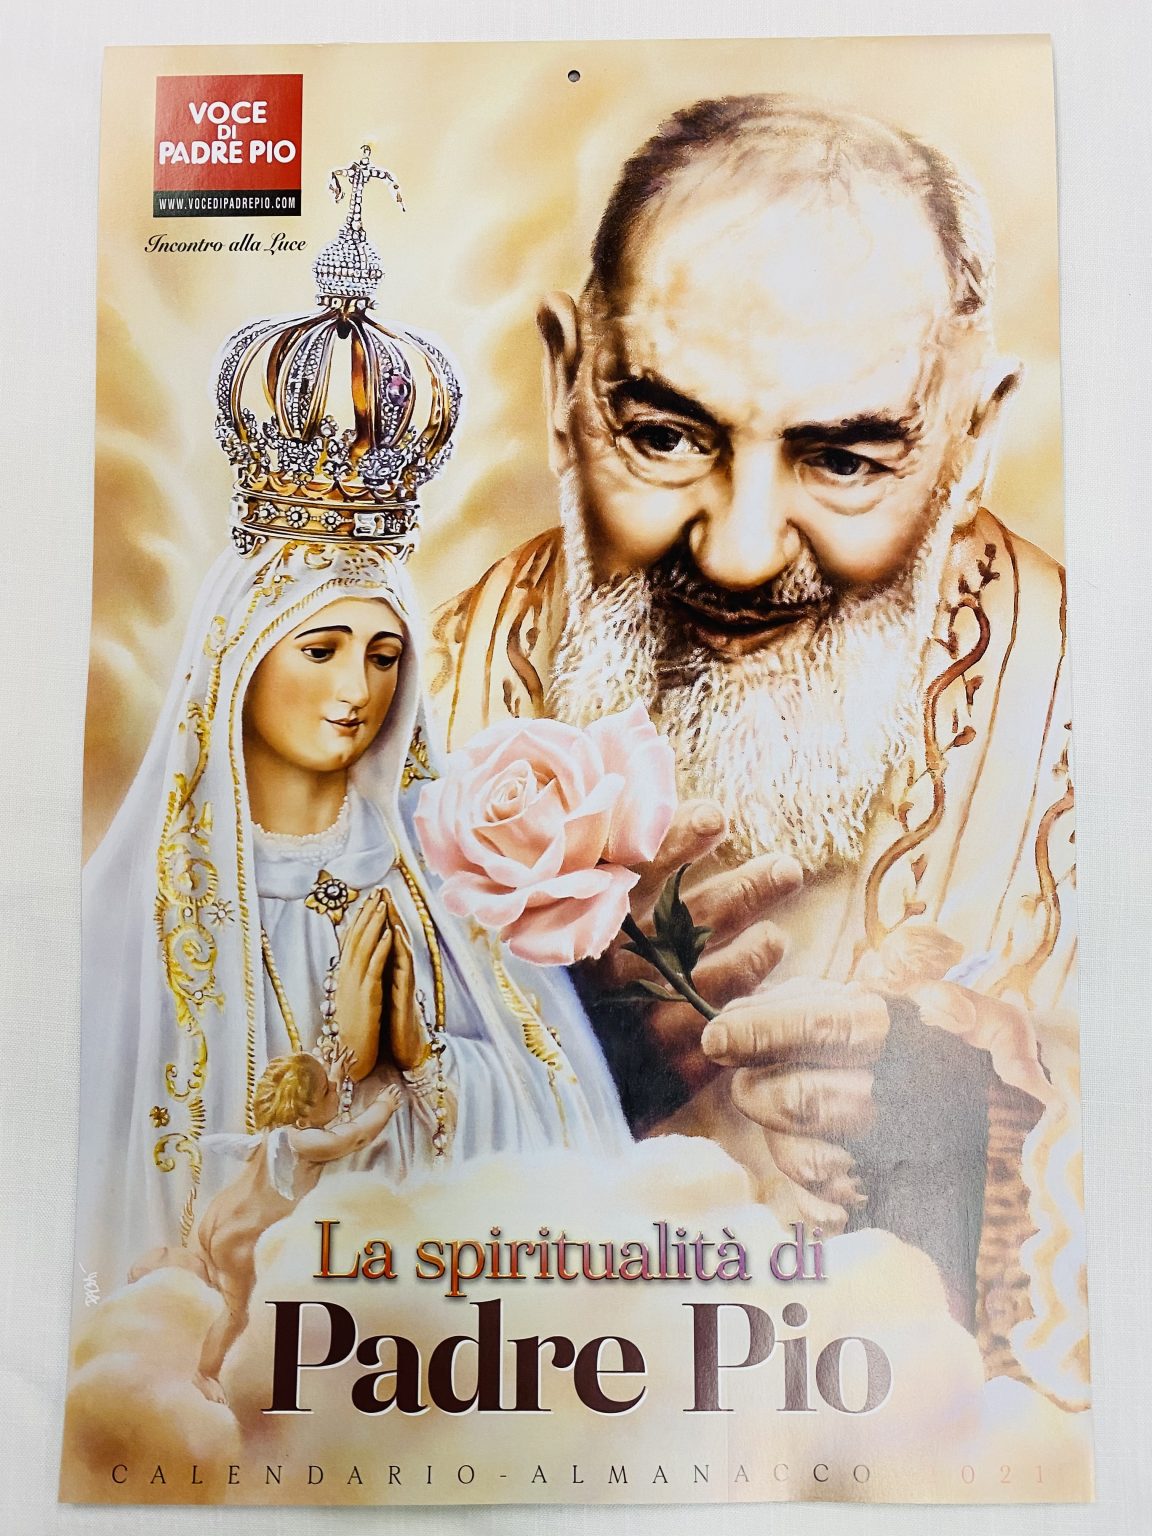 Voce di Padre Pio 2021 Italian Calendar "La Spiritualita di Padre